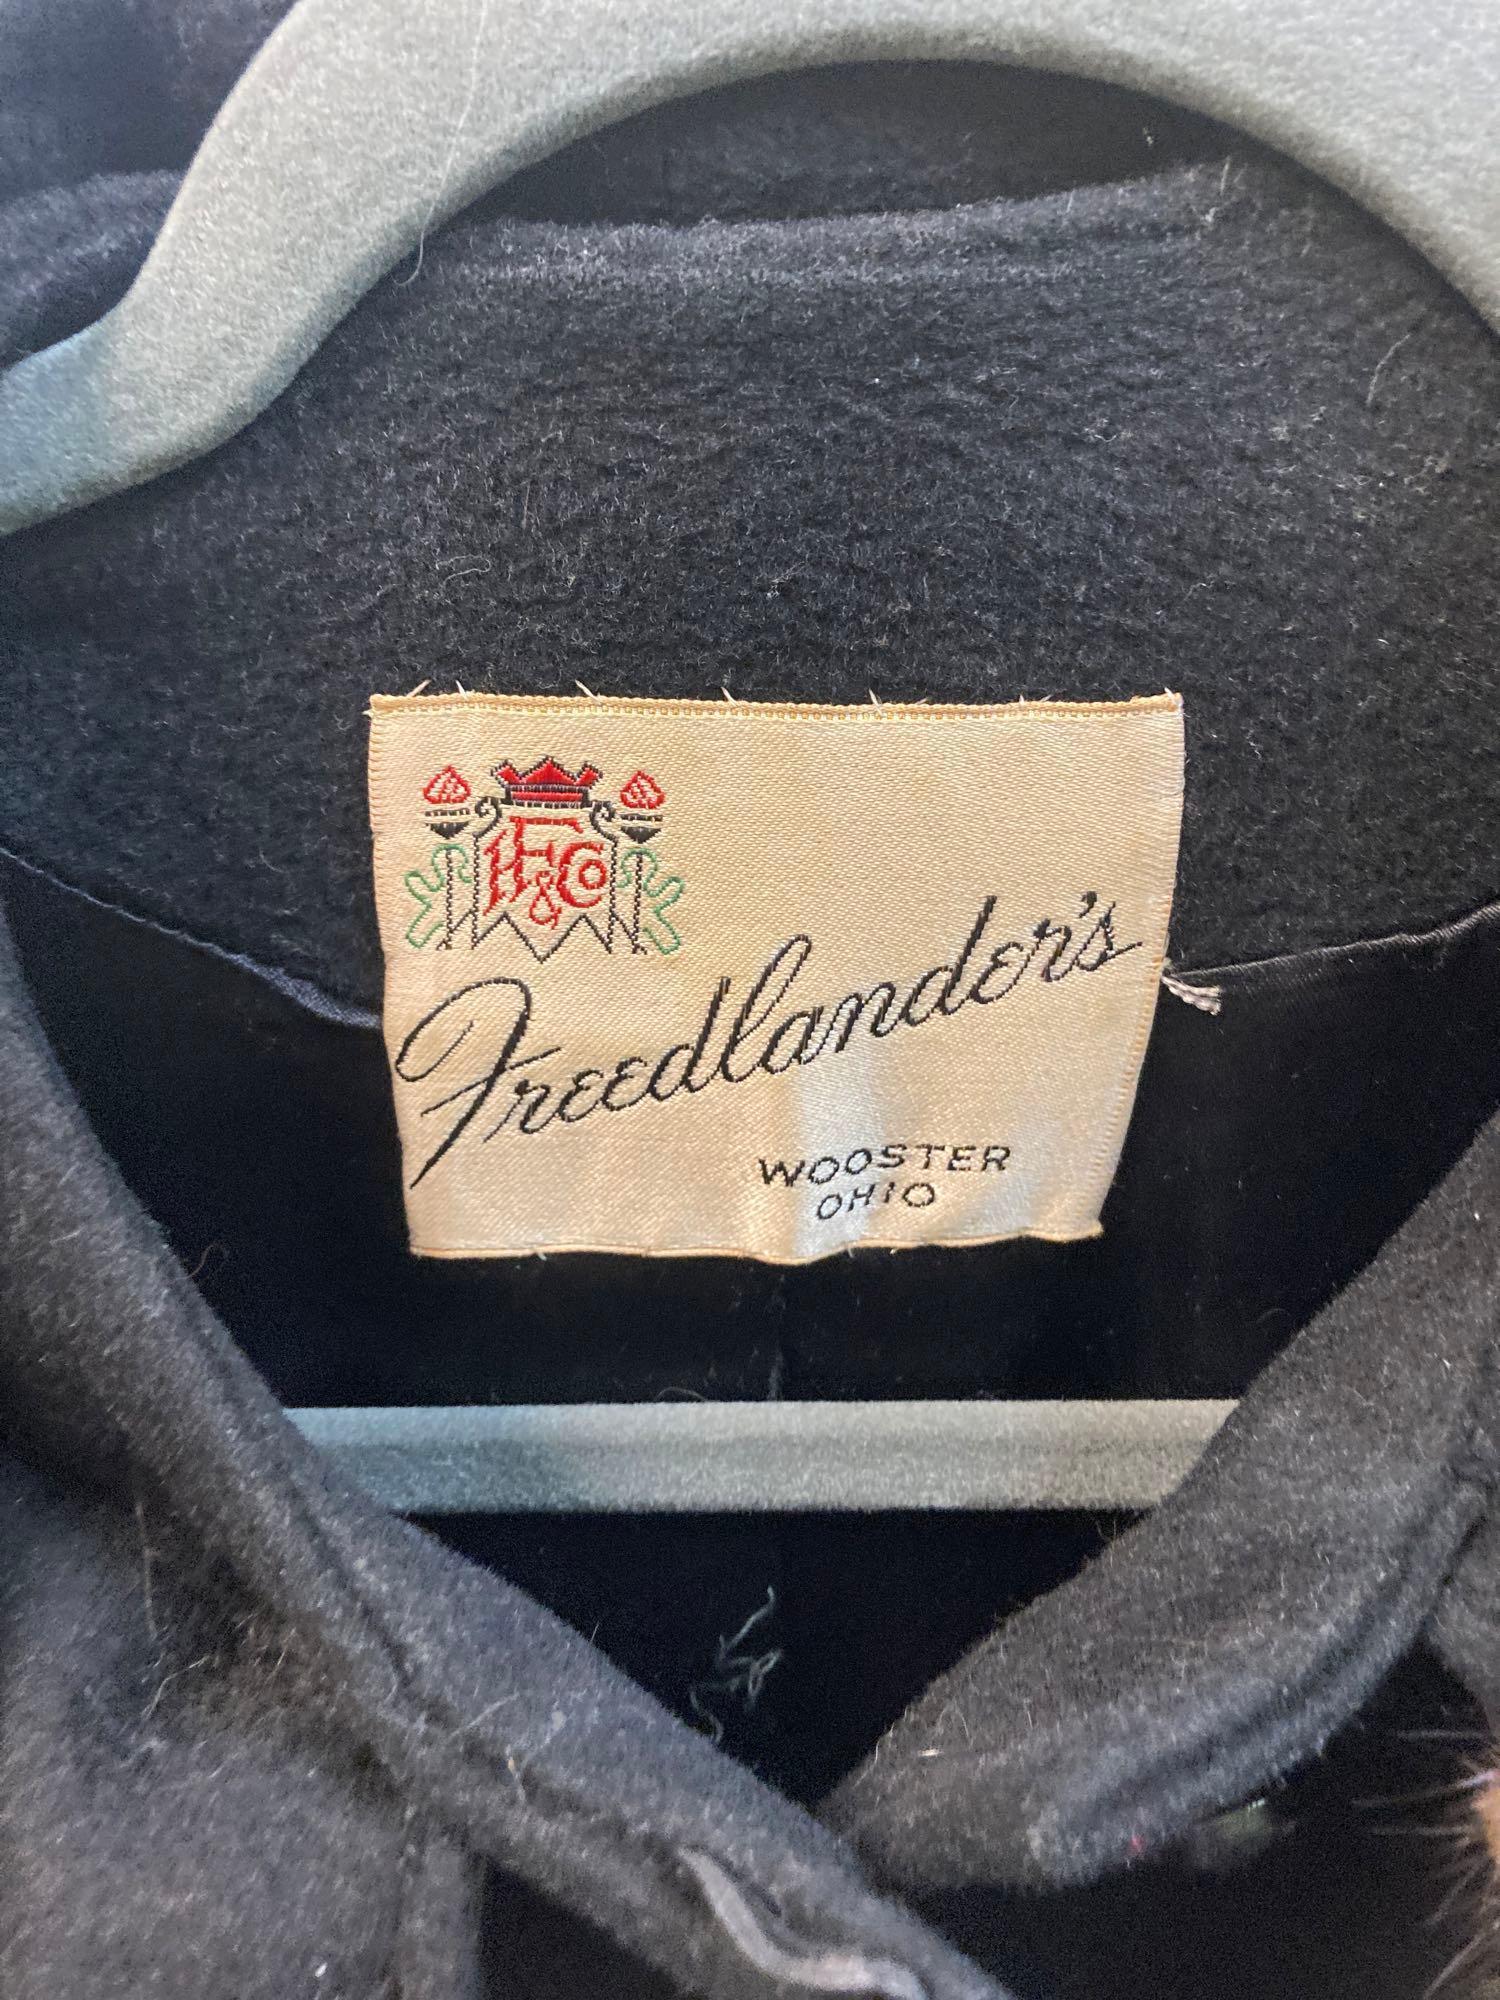 Vintage lucite handle purse long black gloves fur collar and vintage coat with fur collar